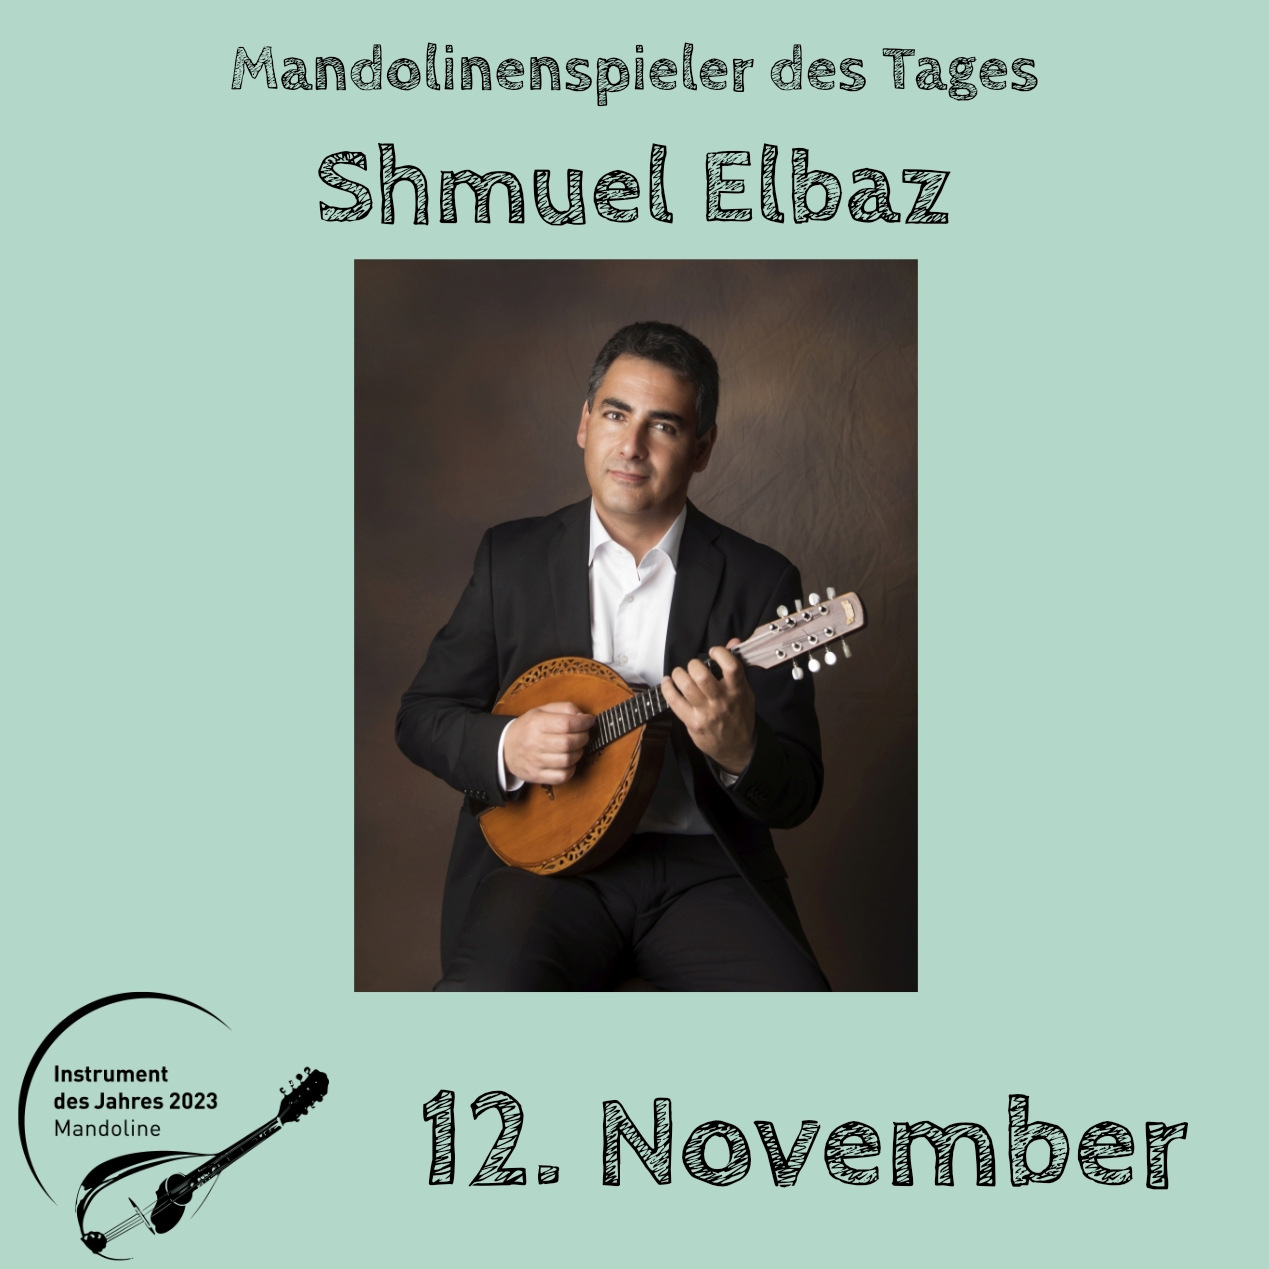 12. November - Shmuel Elbaz Instrument des Jahres 2023 Mandolinenspieler Mandolinenspielerin des Tages